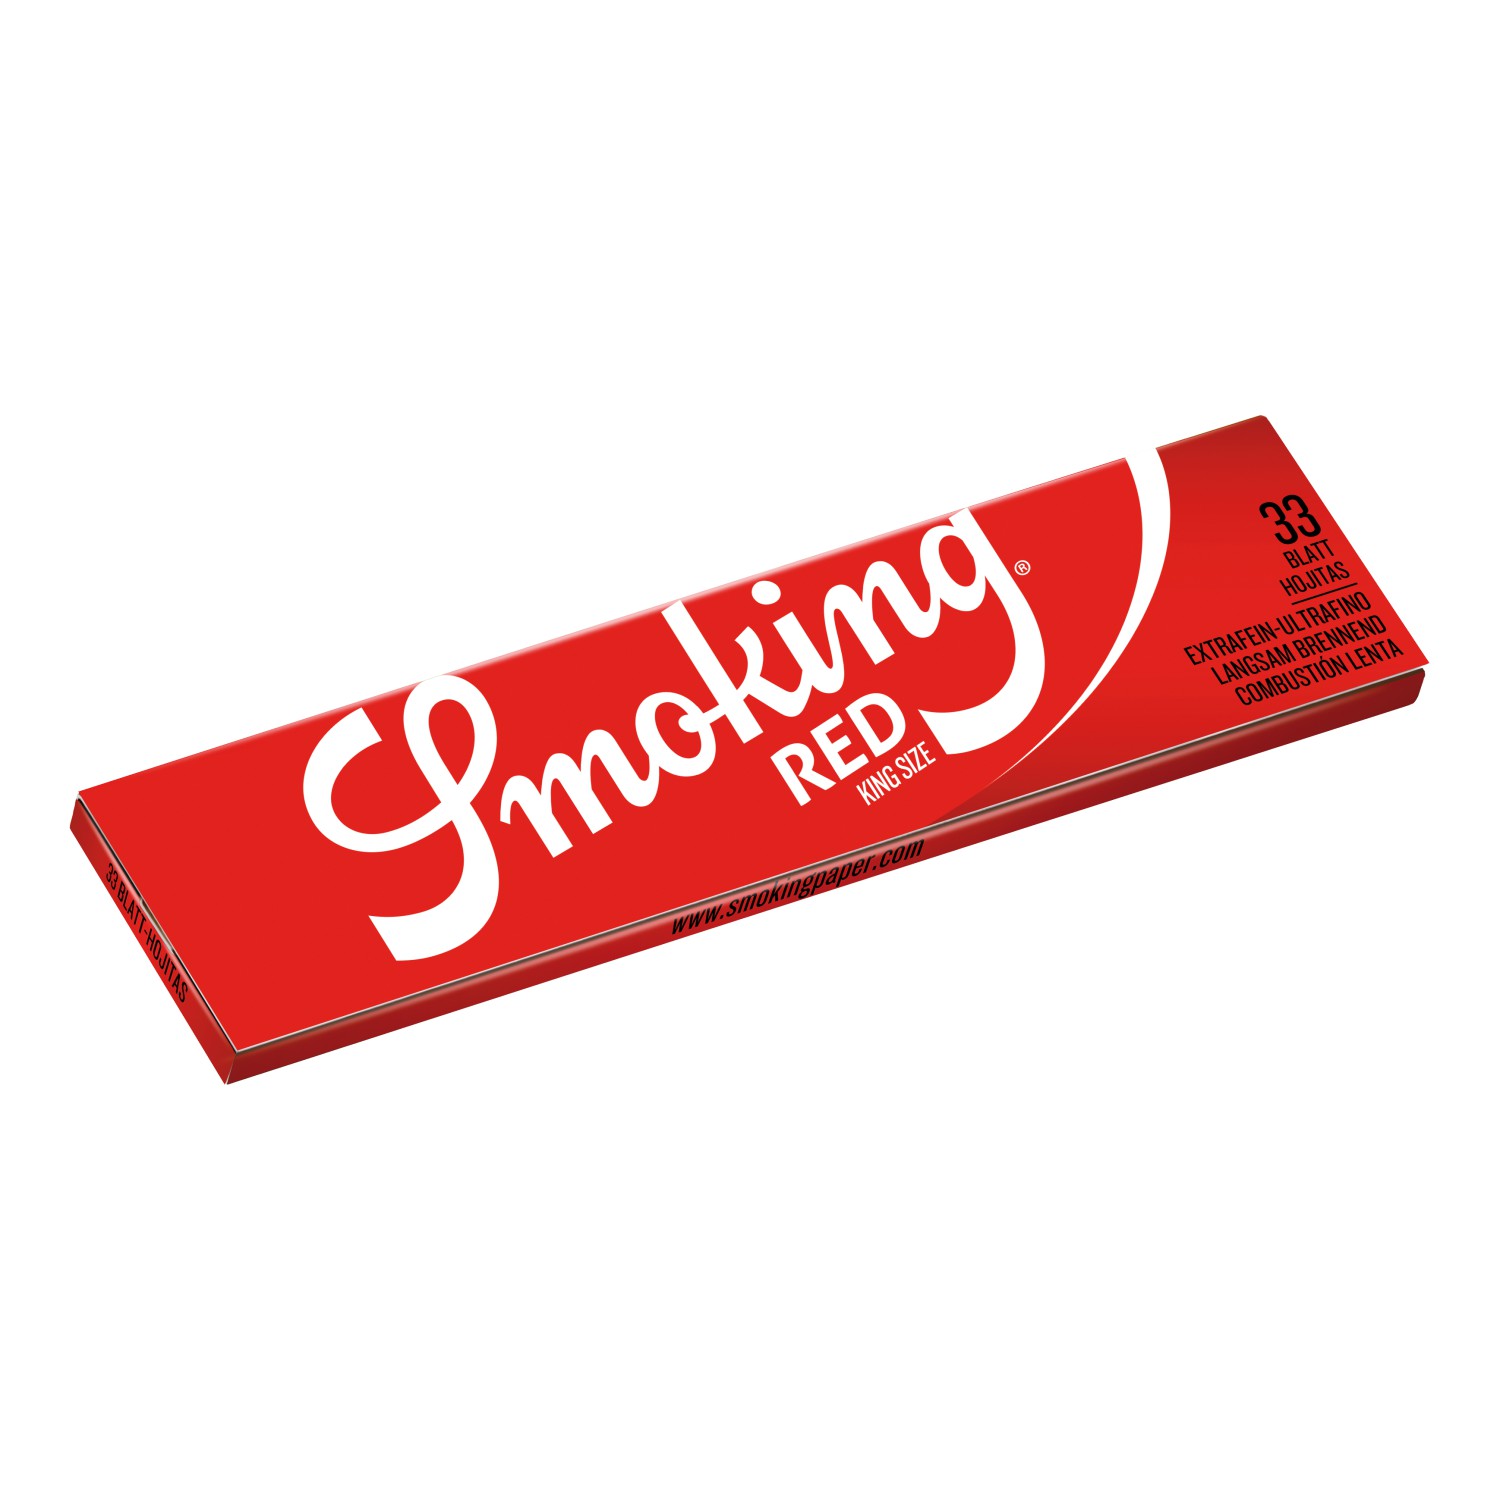 Smoking Rot | King Size Blättchen 50er